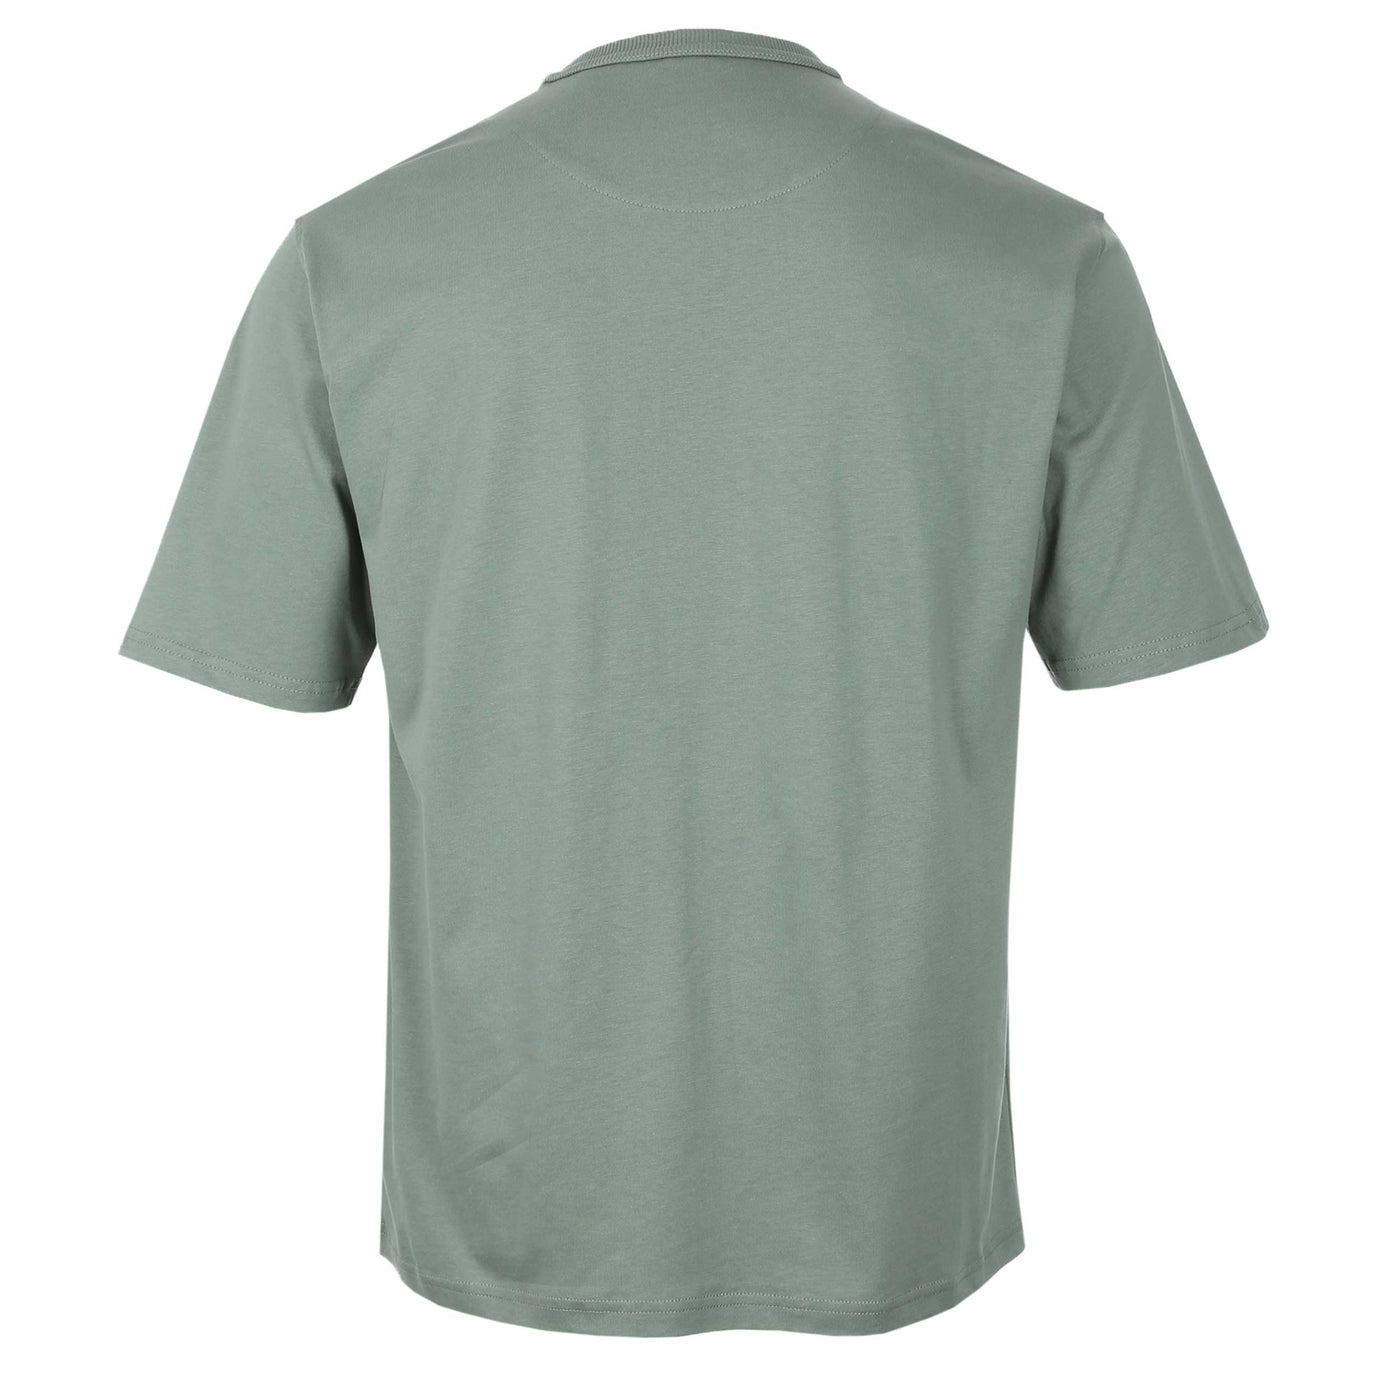 Belstaff Map T-Shirt in Mineral Green Back